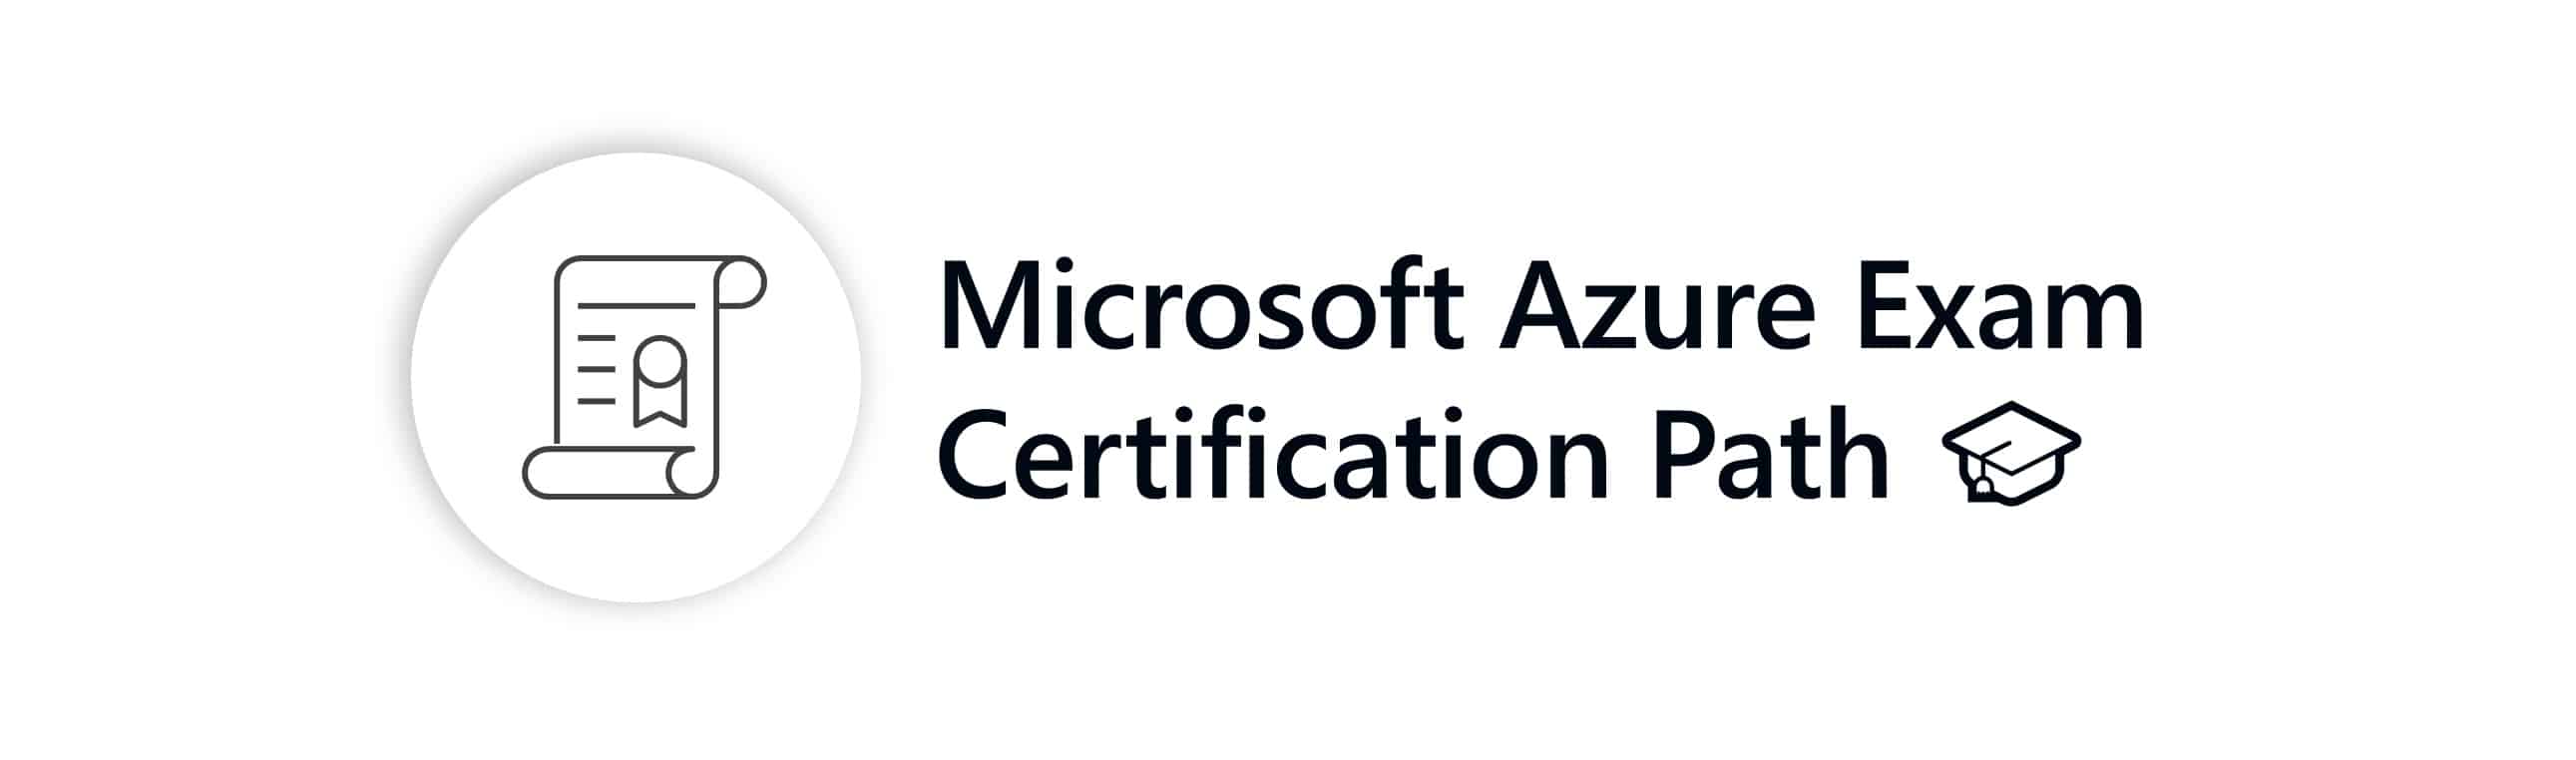 Microsoft Azure Exam Certification Path